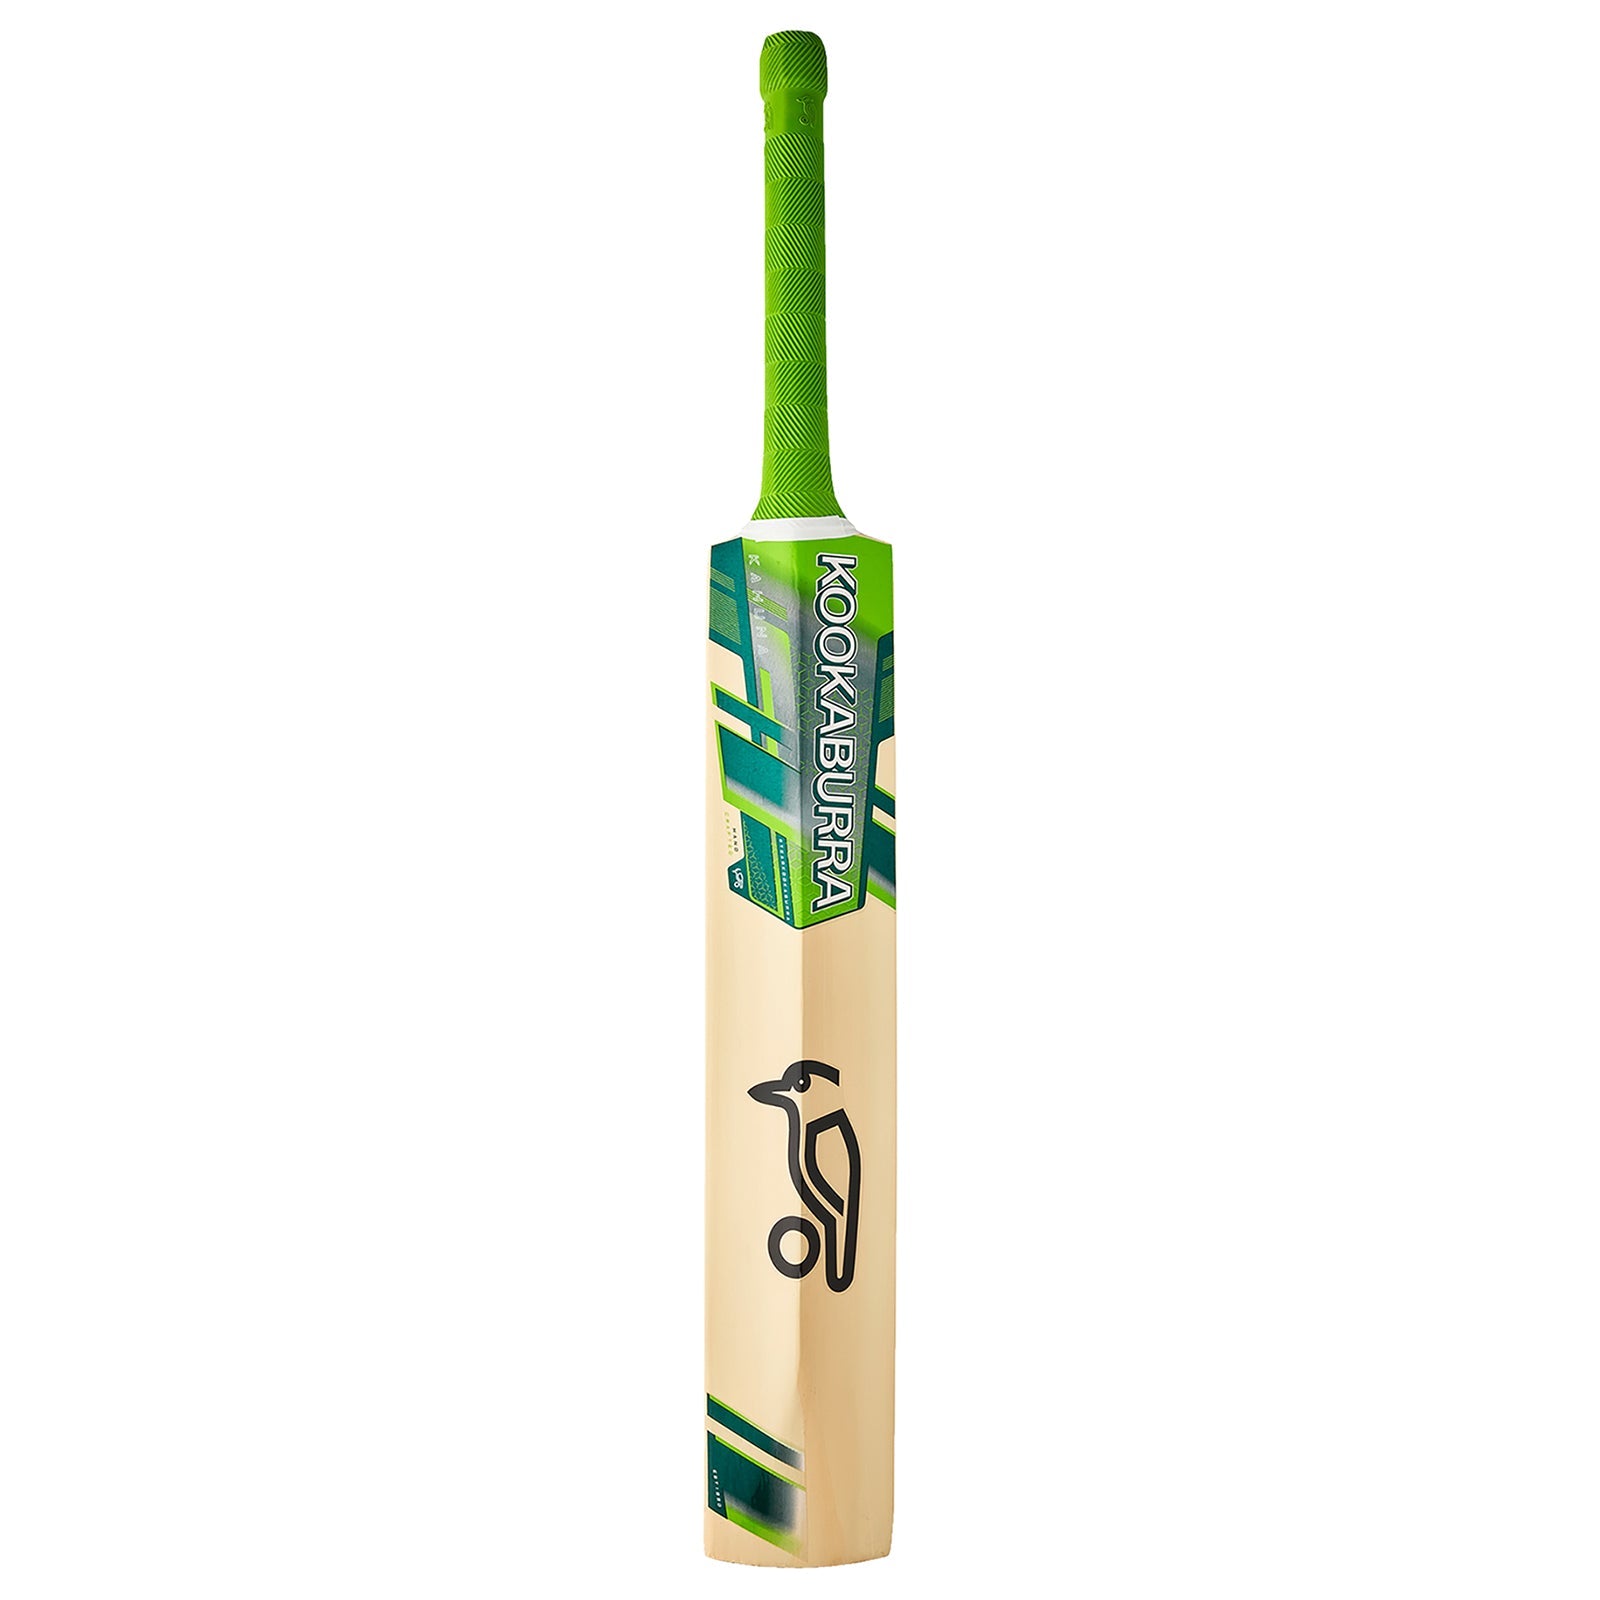 Kookaburra Kahuna Pro 9.0 Kashmir Willow Cricket Bat - Size 4